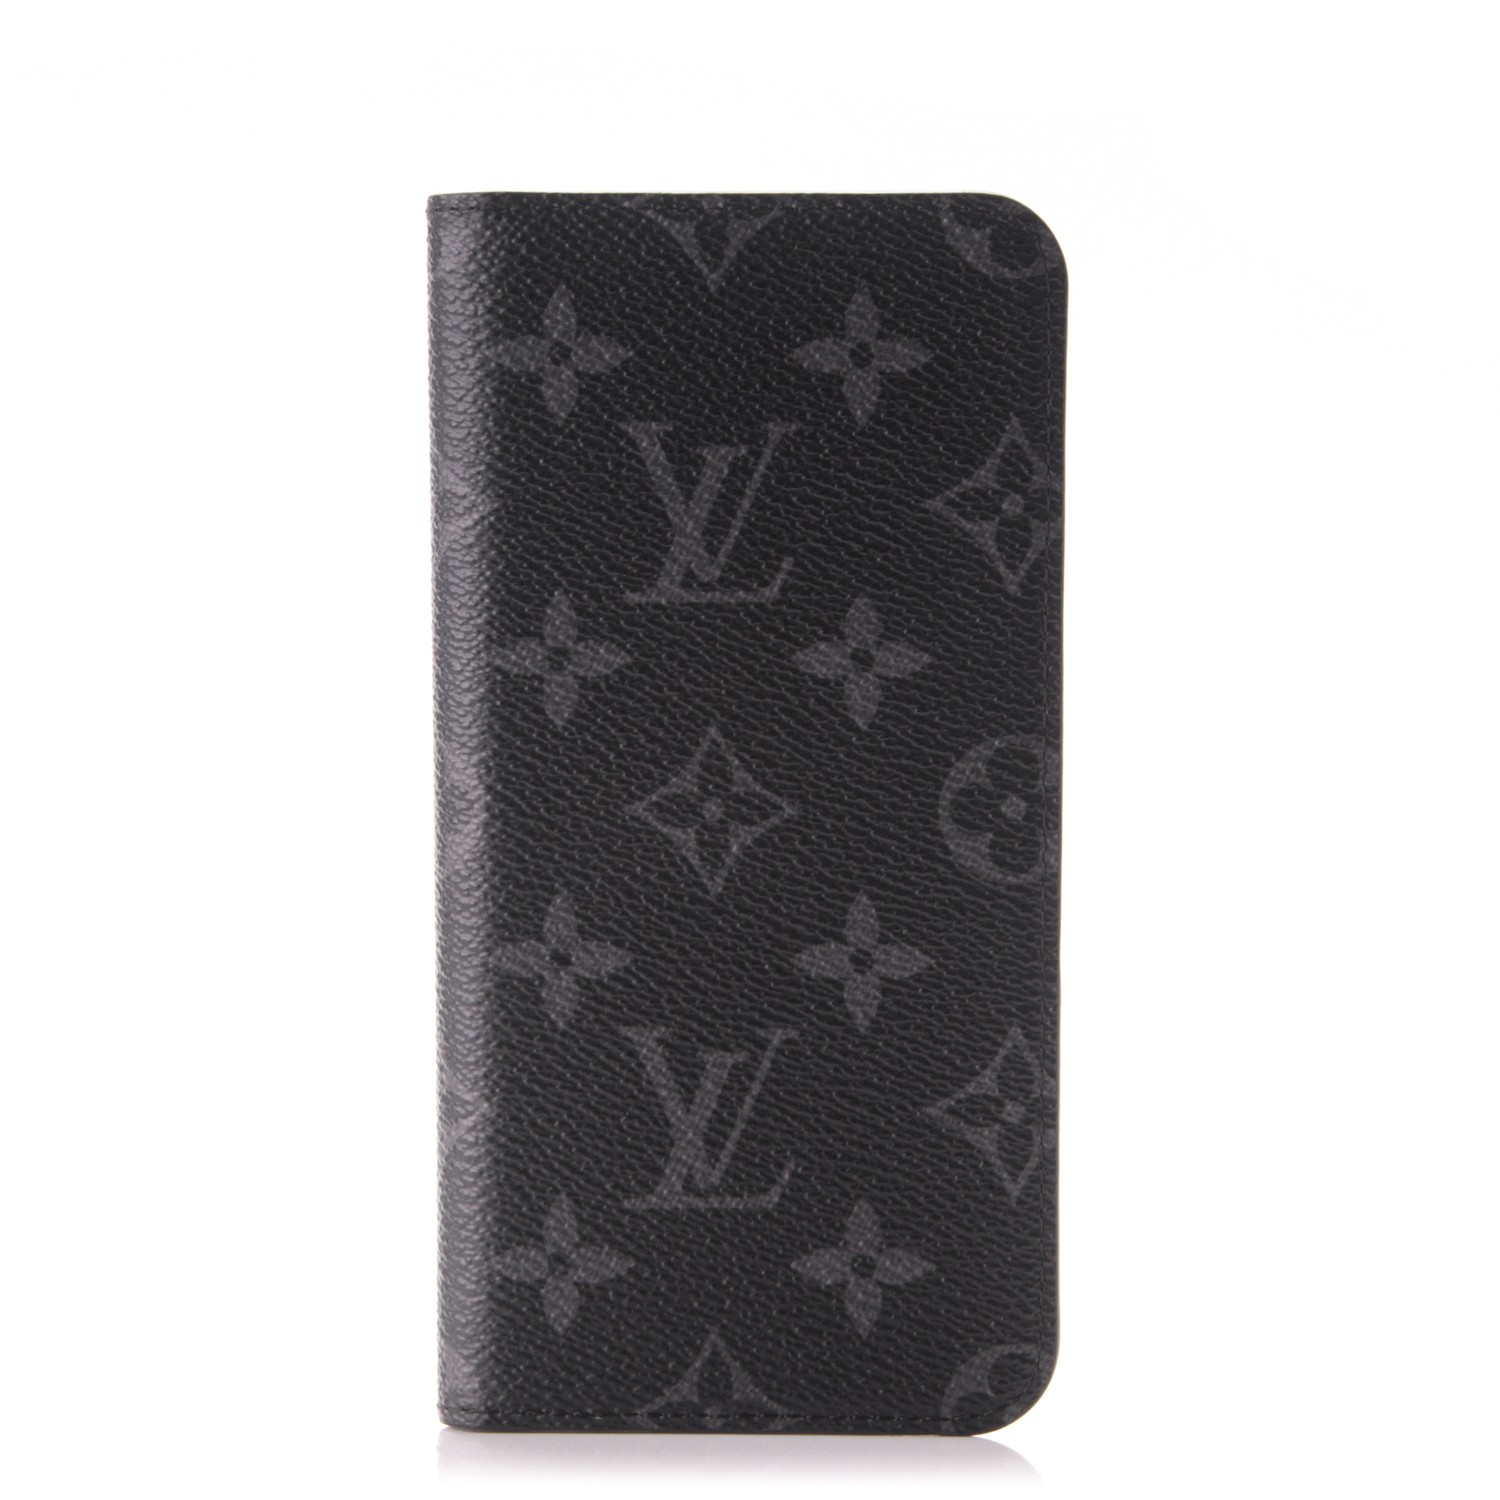 Louis Vuitton Monogram with Blue leather interior Iphone 7 Plus